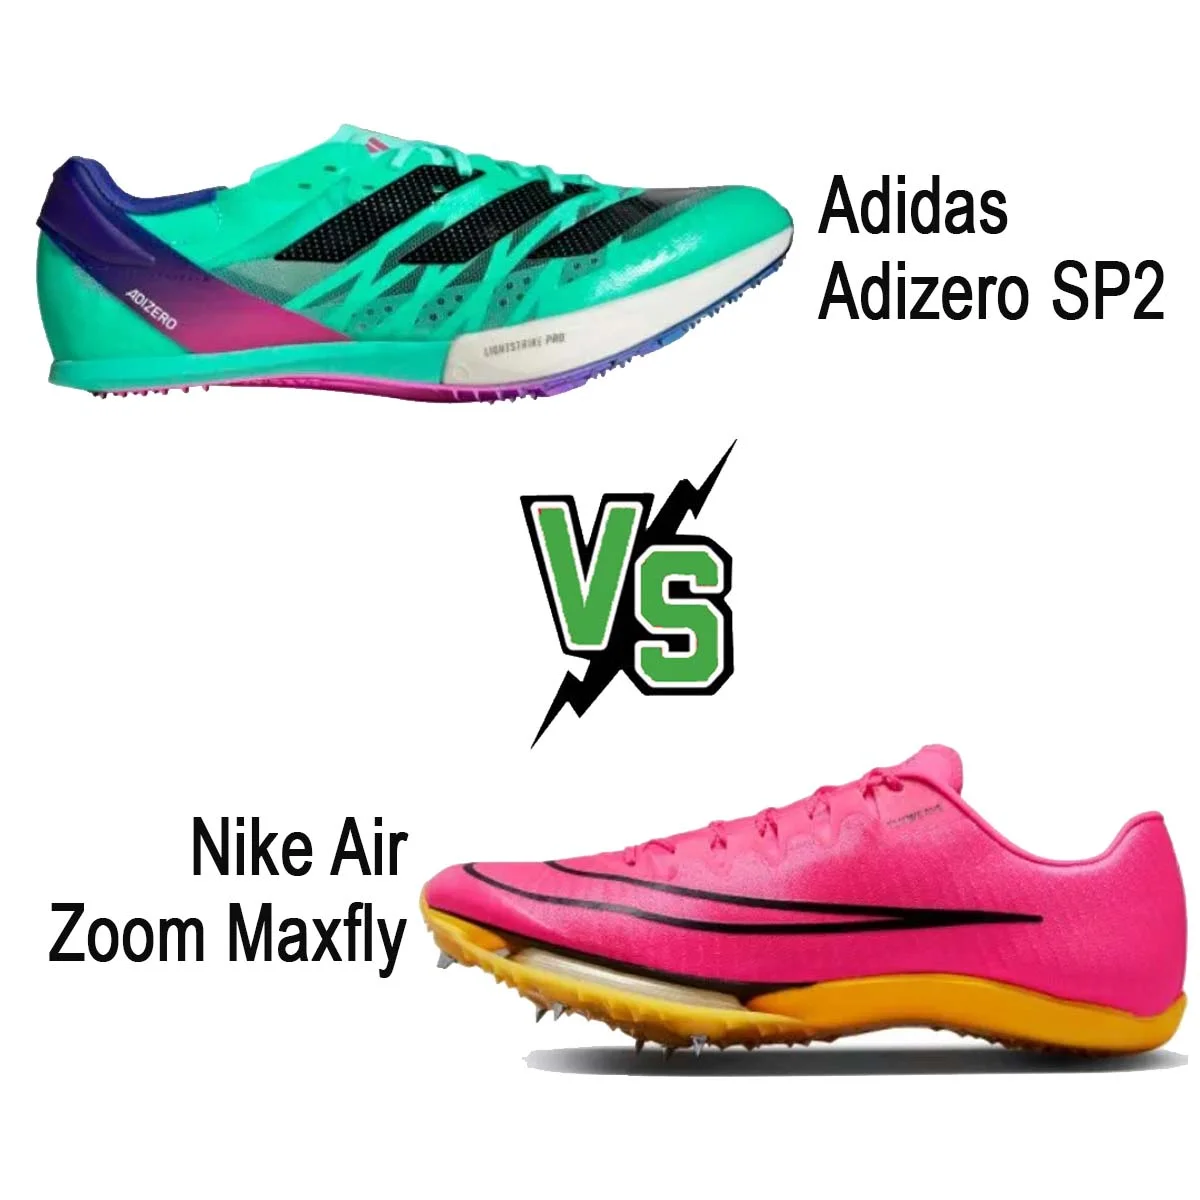 Adidas Adizero SP2 vs Nike Maxfly